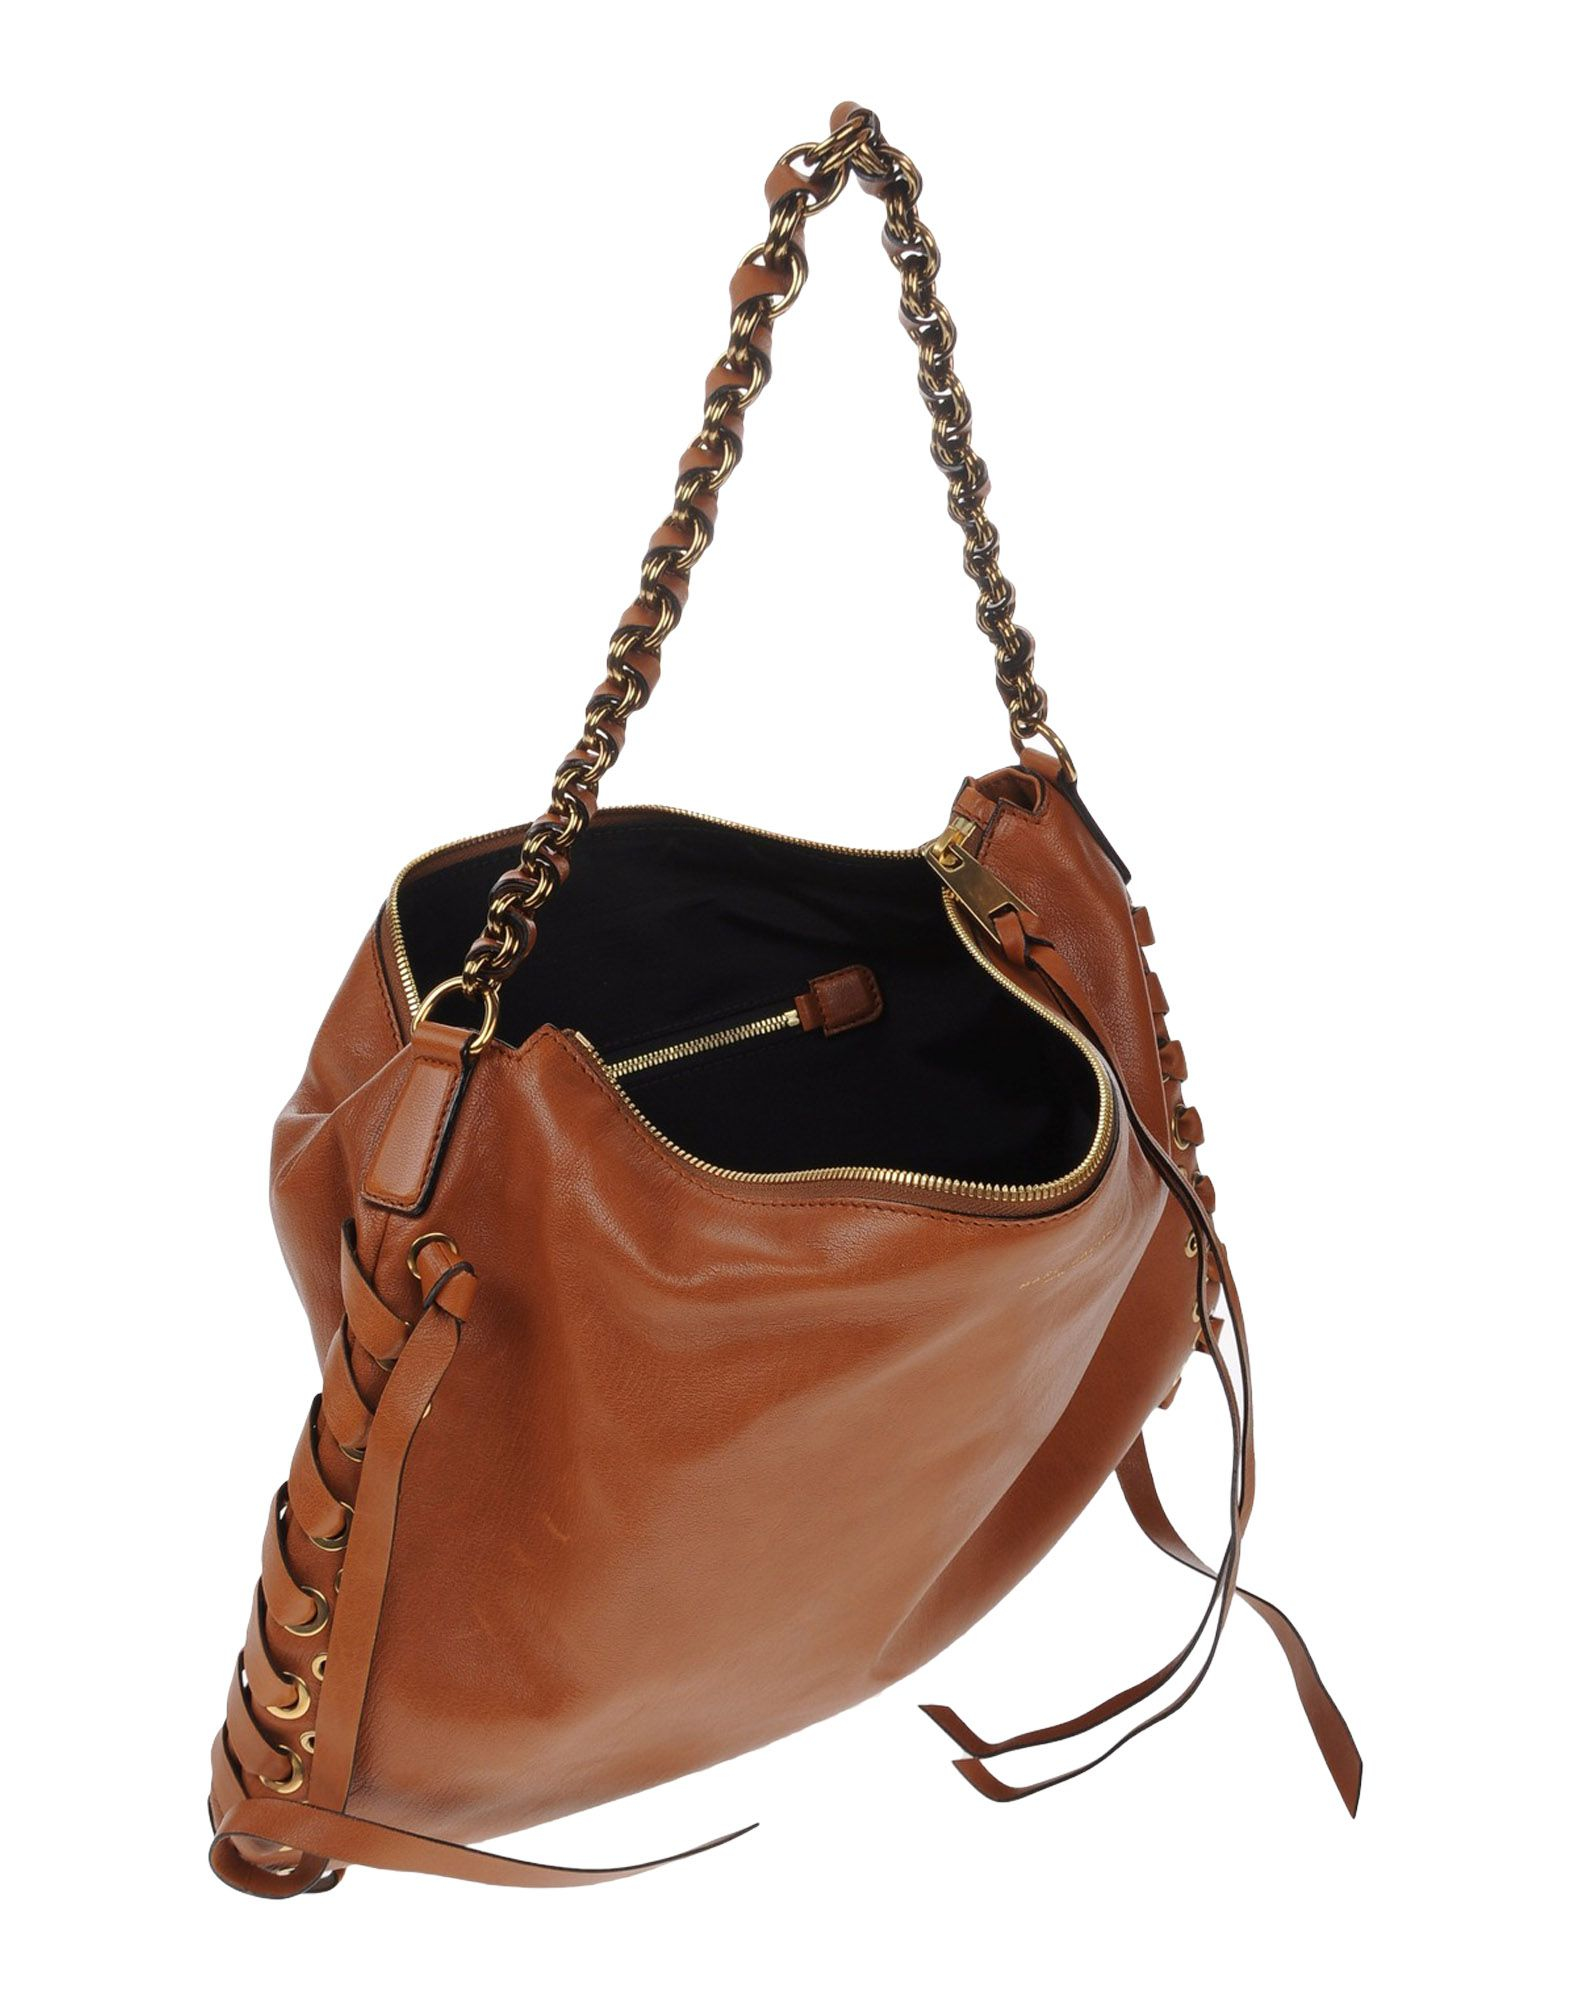 Lyst - Marc Jacobs Handbag in Brown